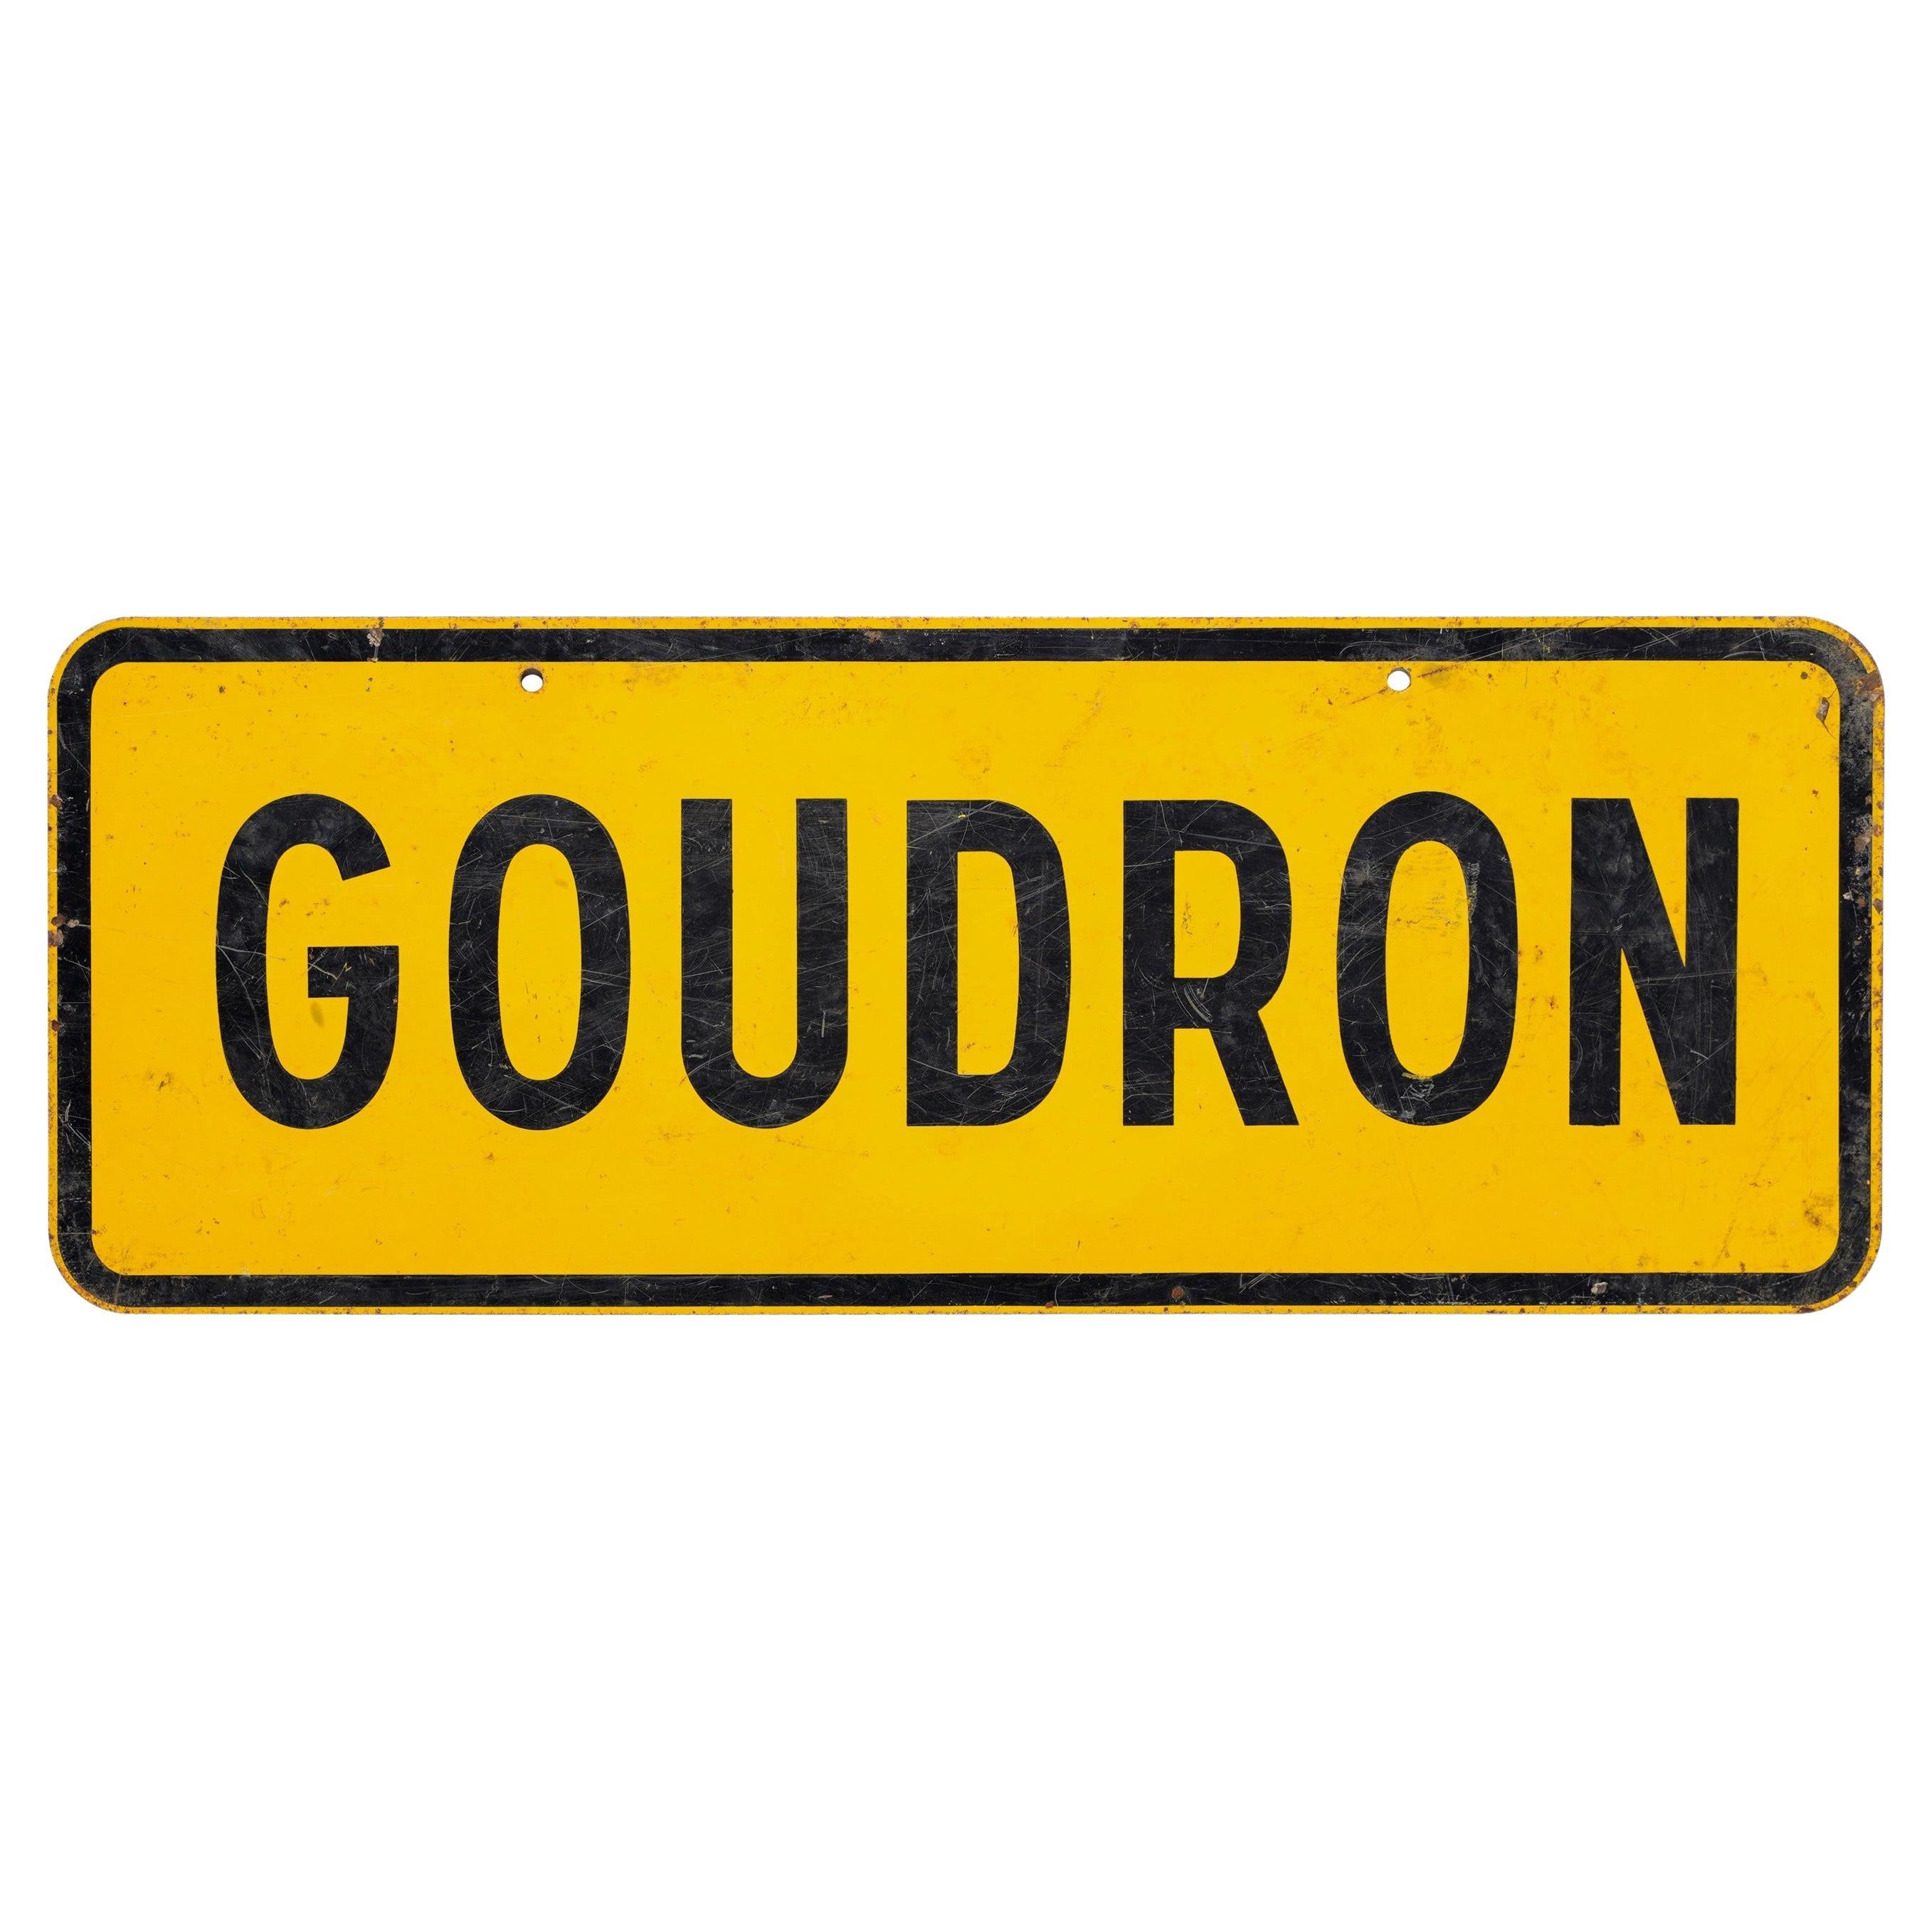 European Gurdon or "Tar" Street Sign Black Yellow Paint